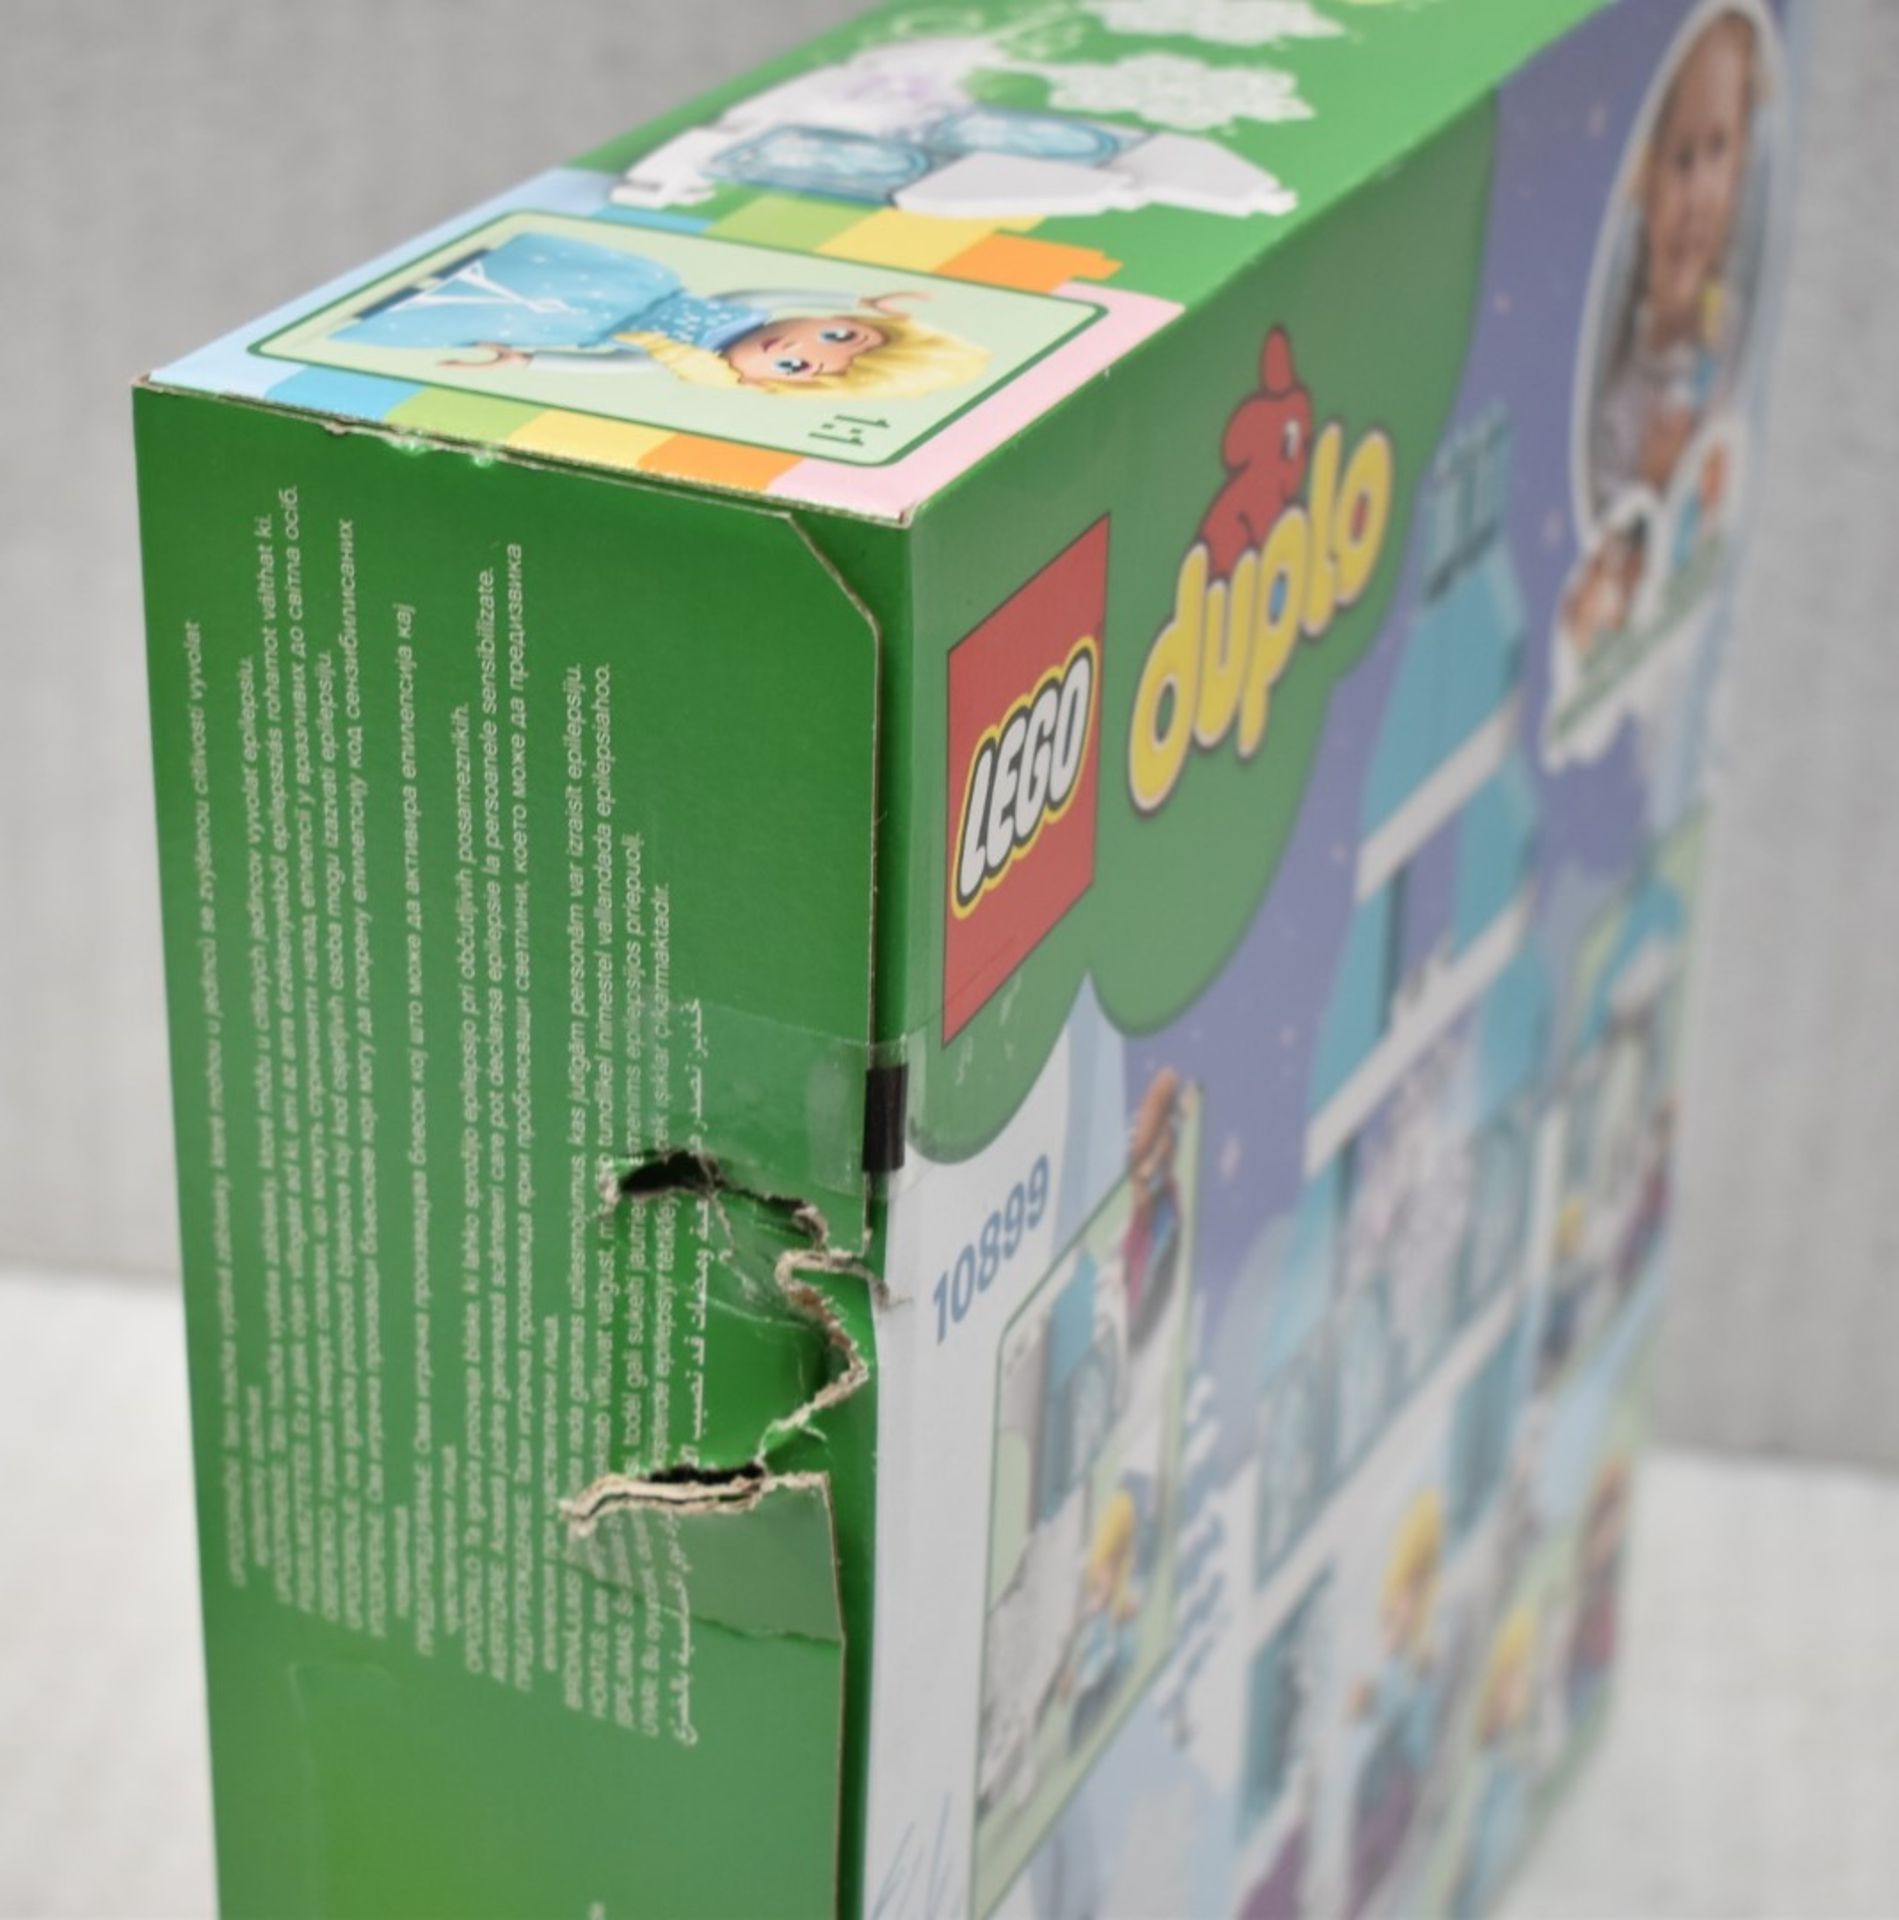 1 x LEGO DUPLO Disney Frozen Ice Castle Set 10899 - Includes 3 Minifigures and Castle Toy Button- - Image 3 of 4